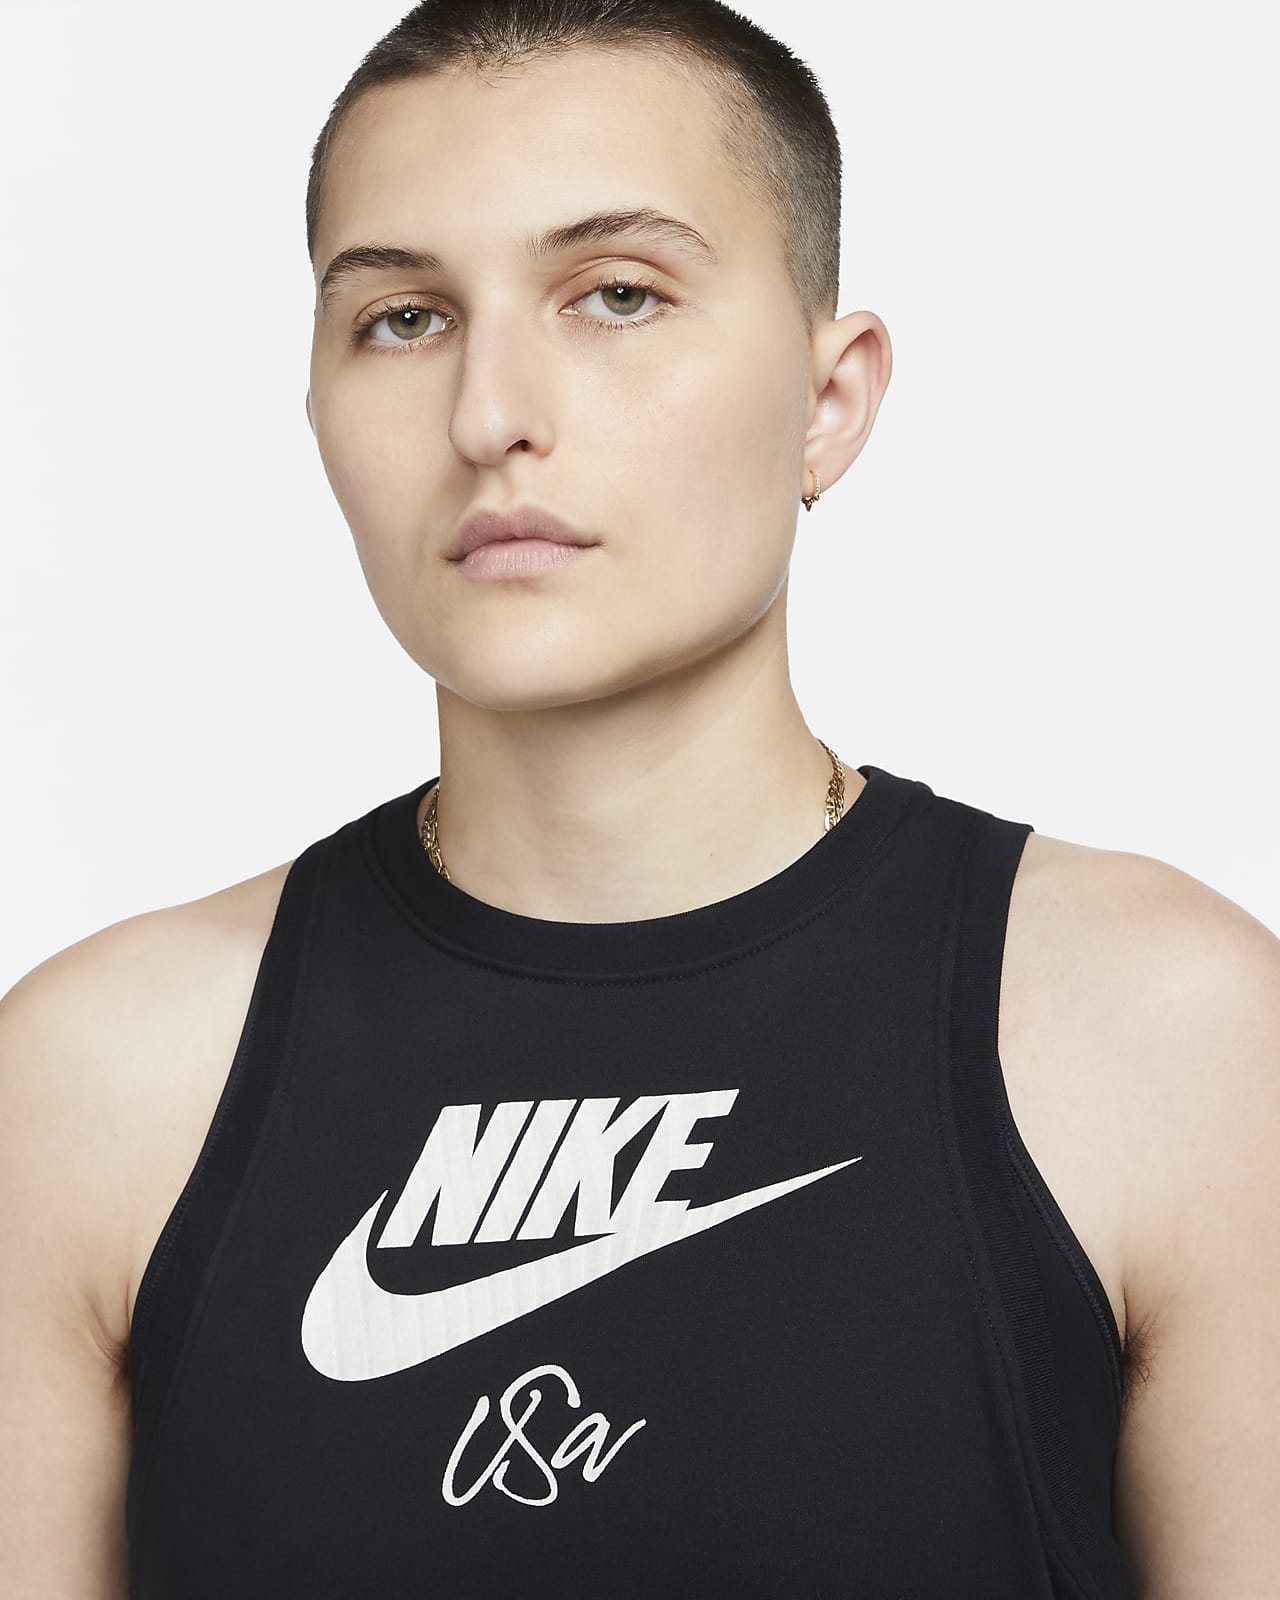 U.S. Women's Nike Tank Top.